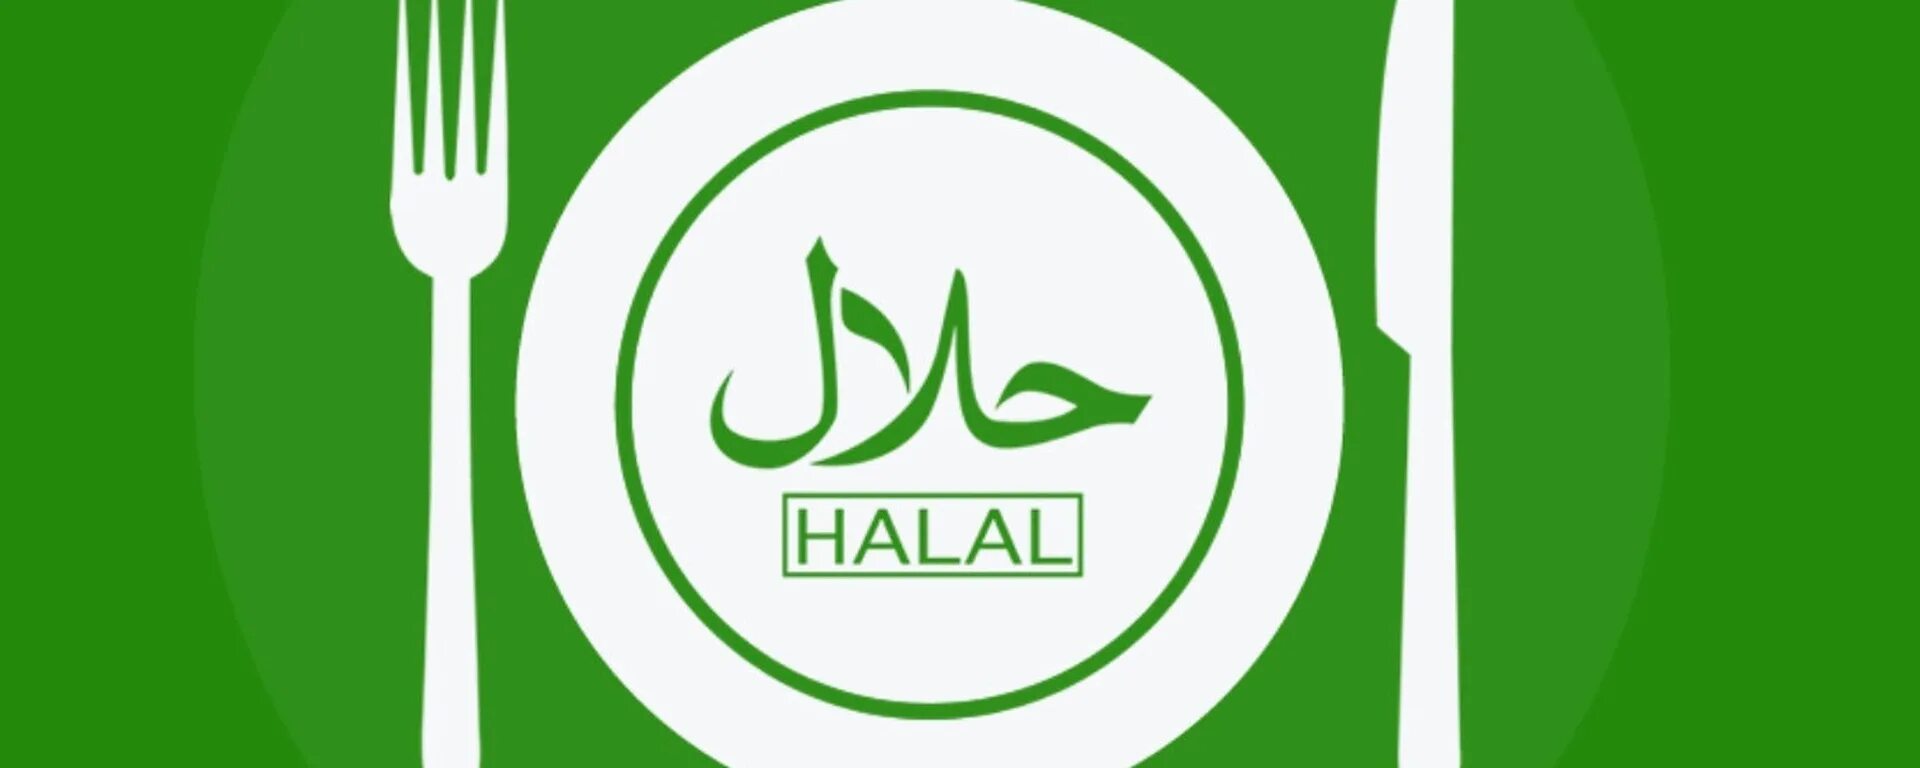 Халяль заведения. Халяль. Эмблема Халяль. Логотип кафе Халяль. Значок Халяль зеленый.